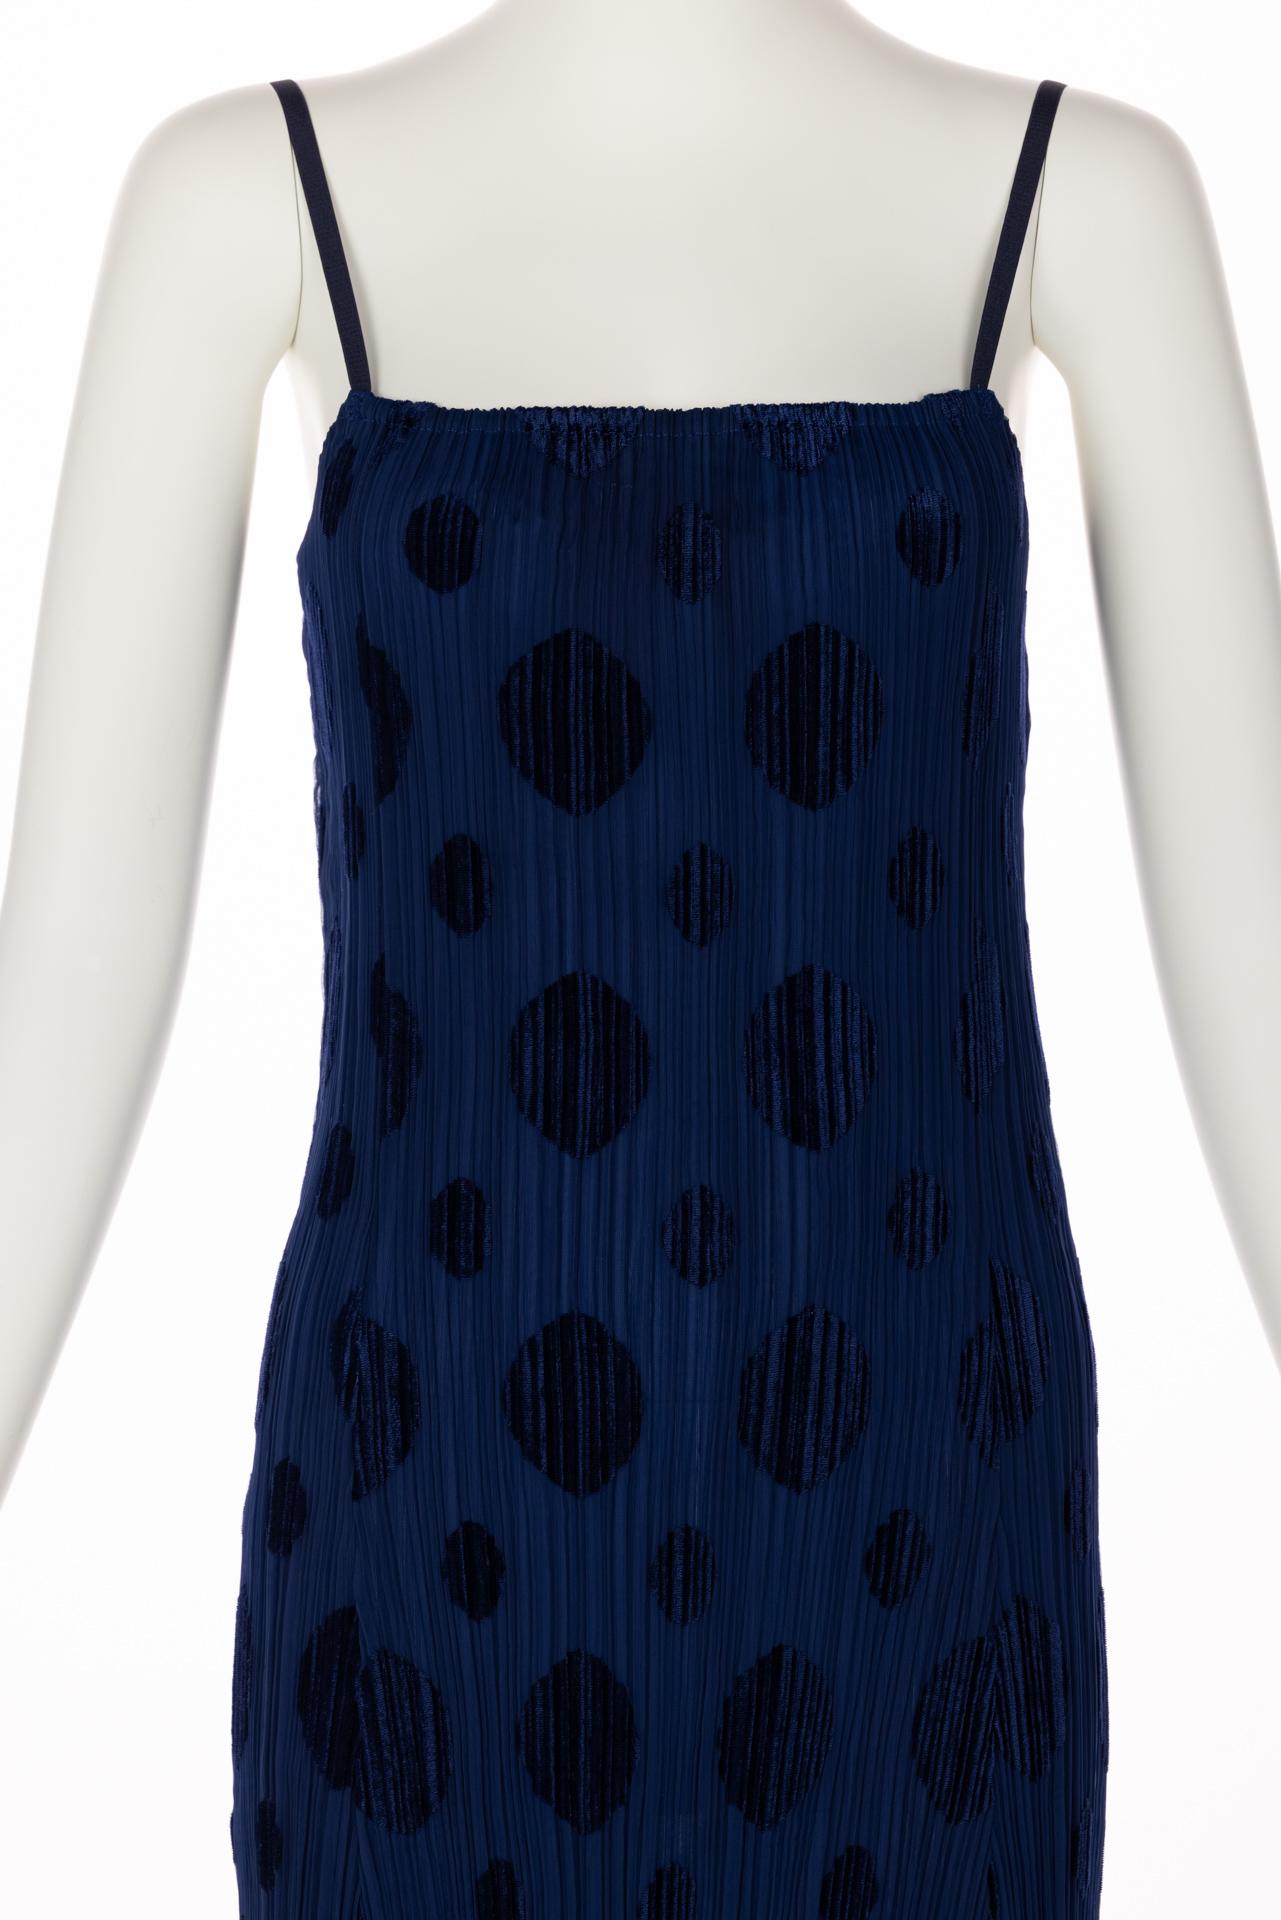 Issey Miyake Pleated Blue Polka Dot Dress & Jacket Set For Sale 5